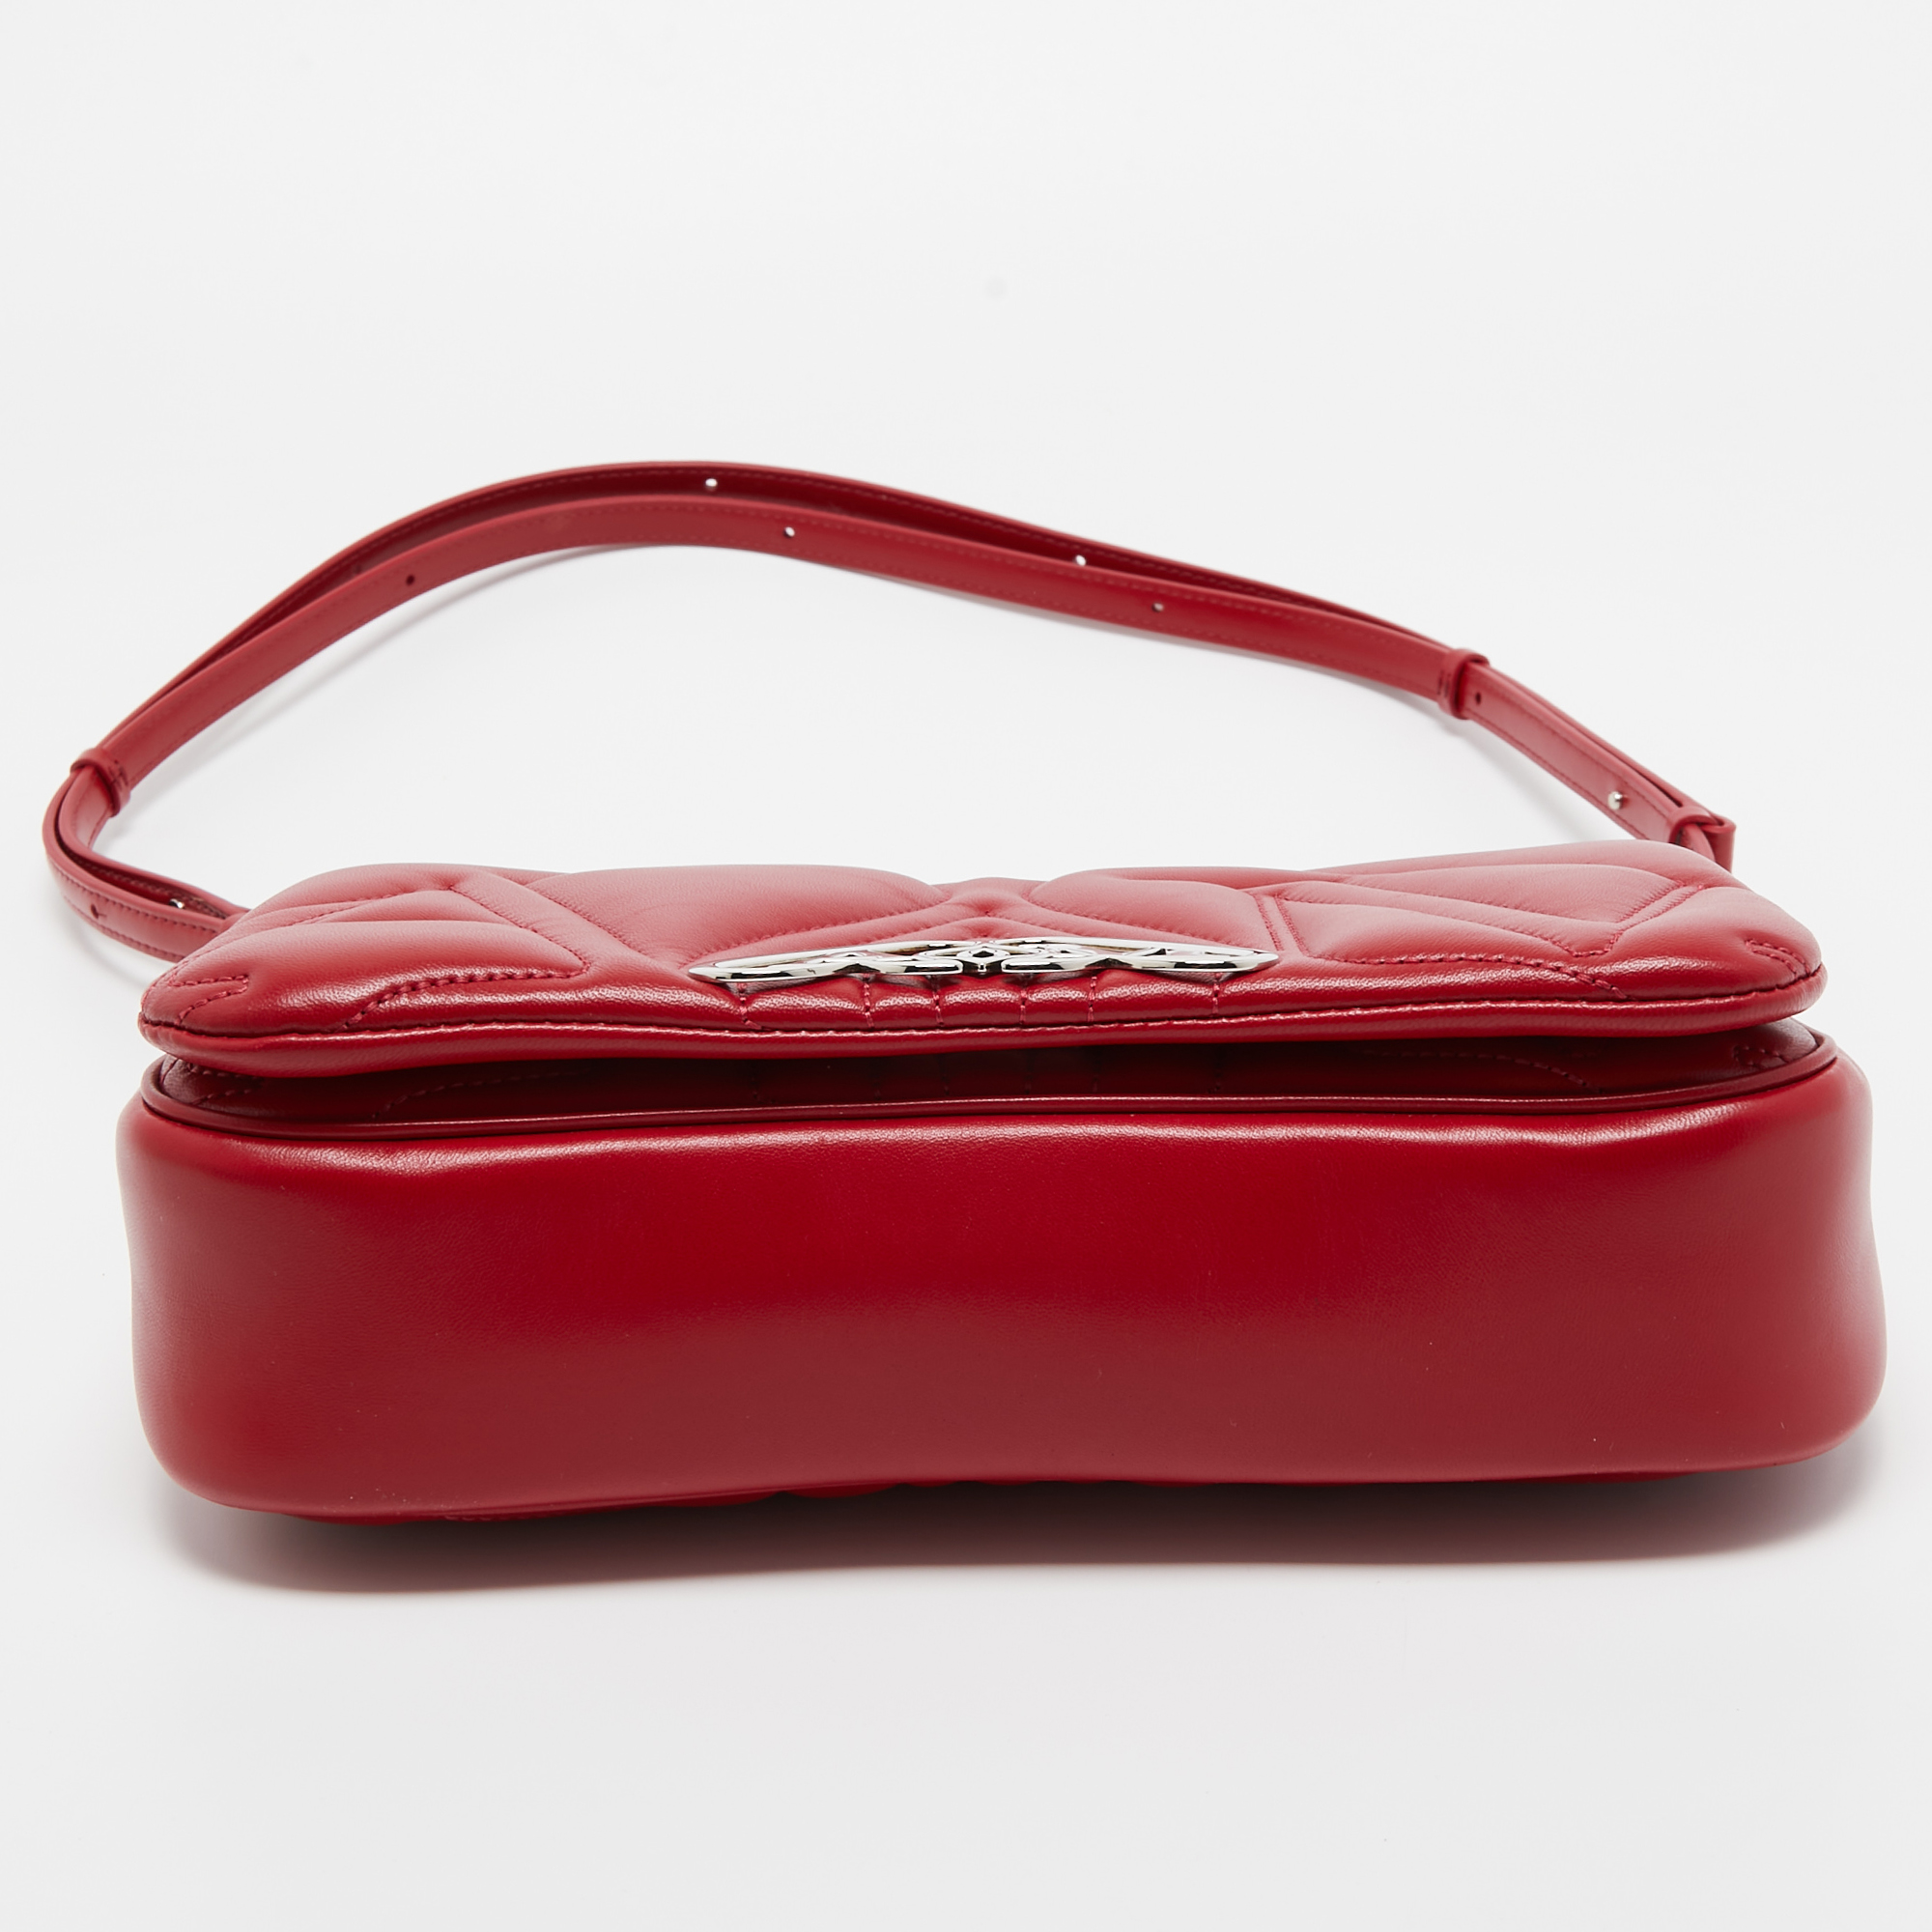 Alexander McQueen Red Embossed Leather The Seal Shoulder Bag